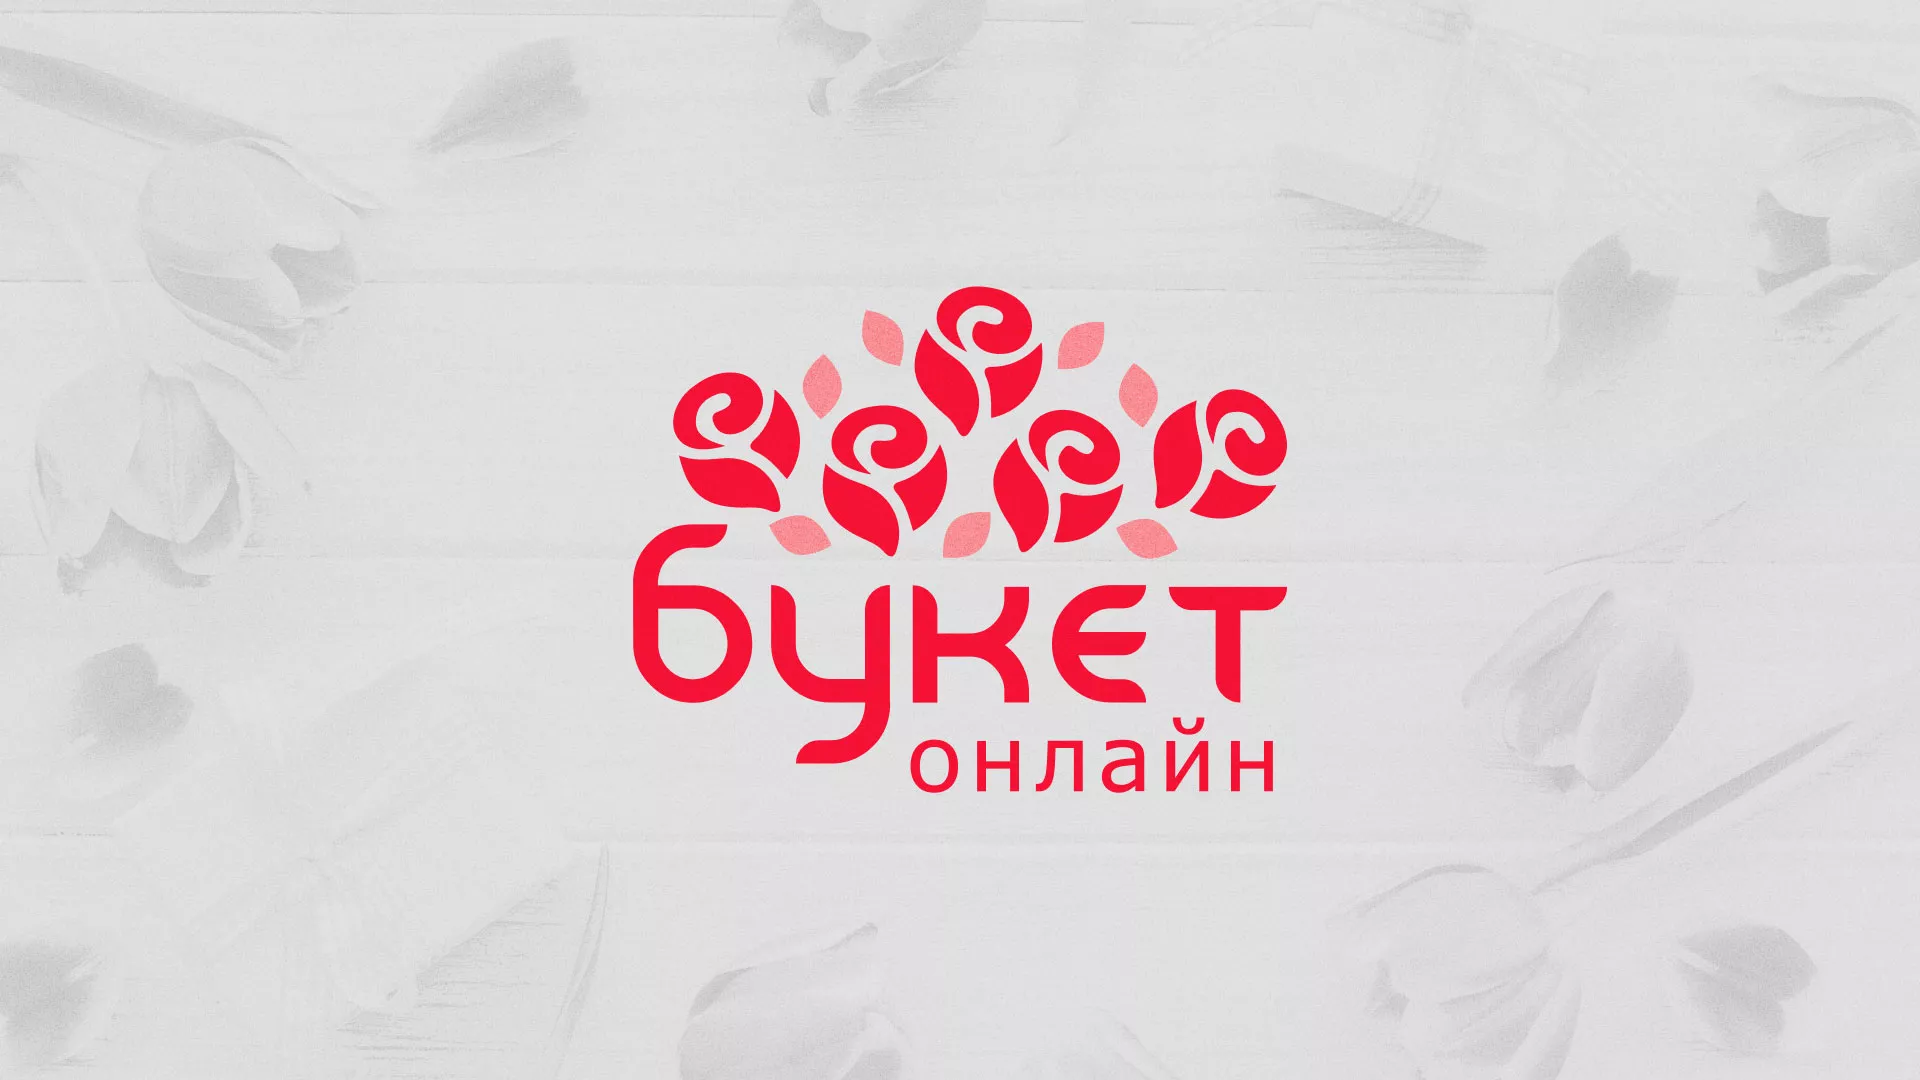 Создание интернет-магазина «Букет-онлайн» по цветам в Касимове